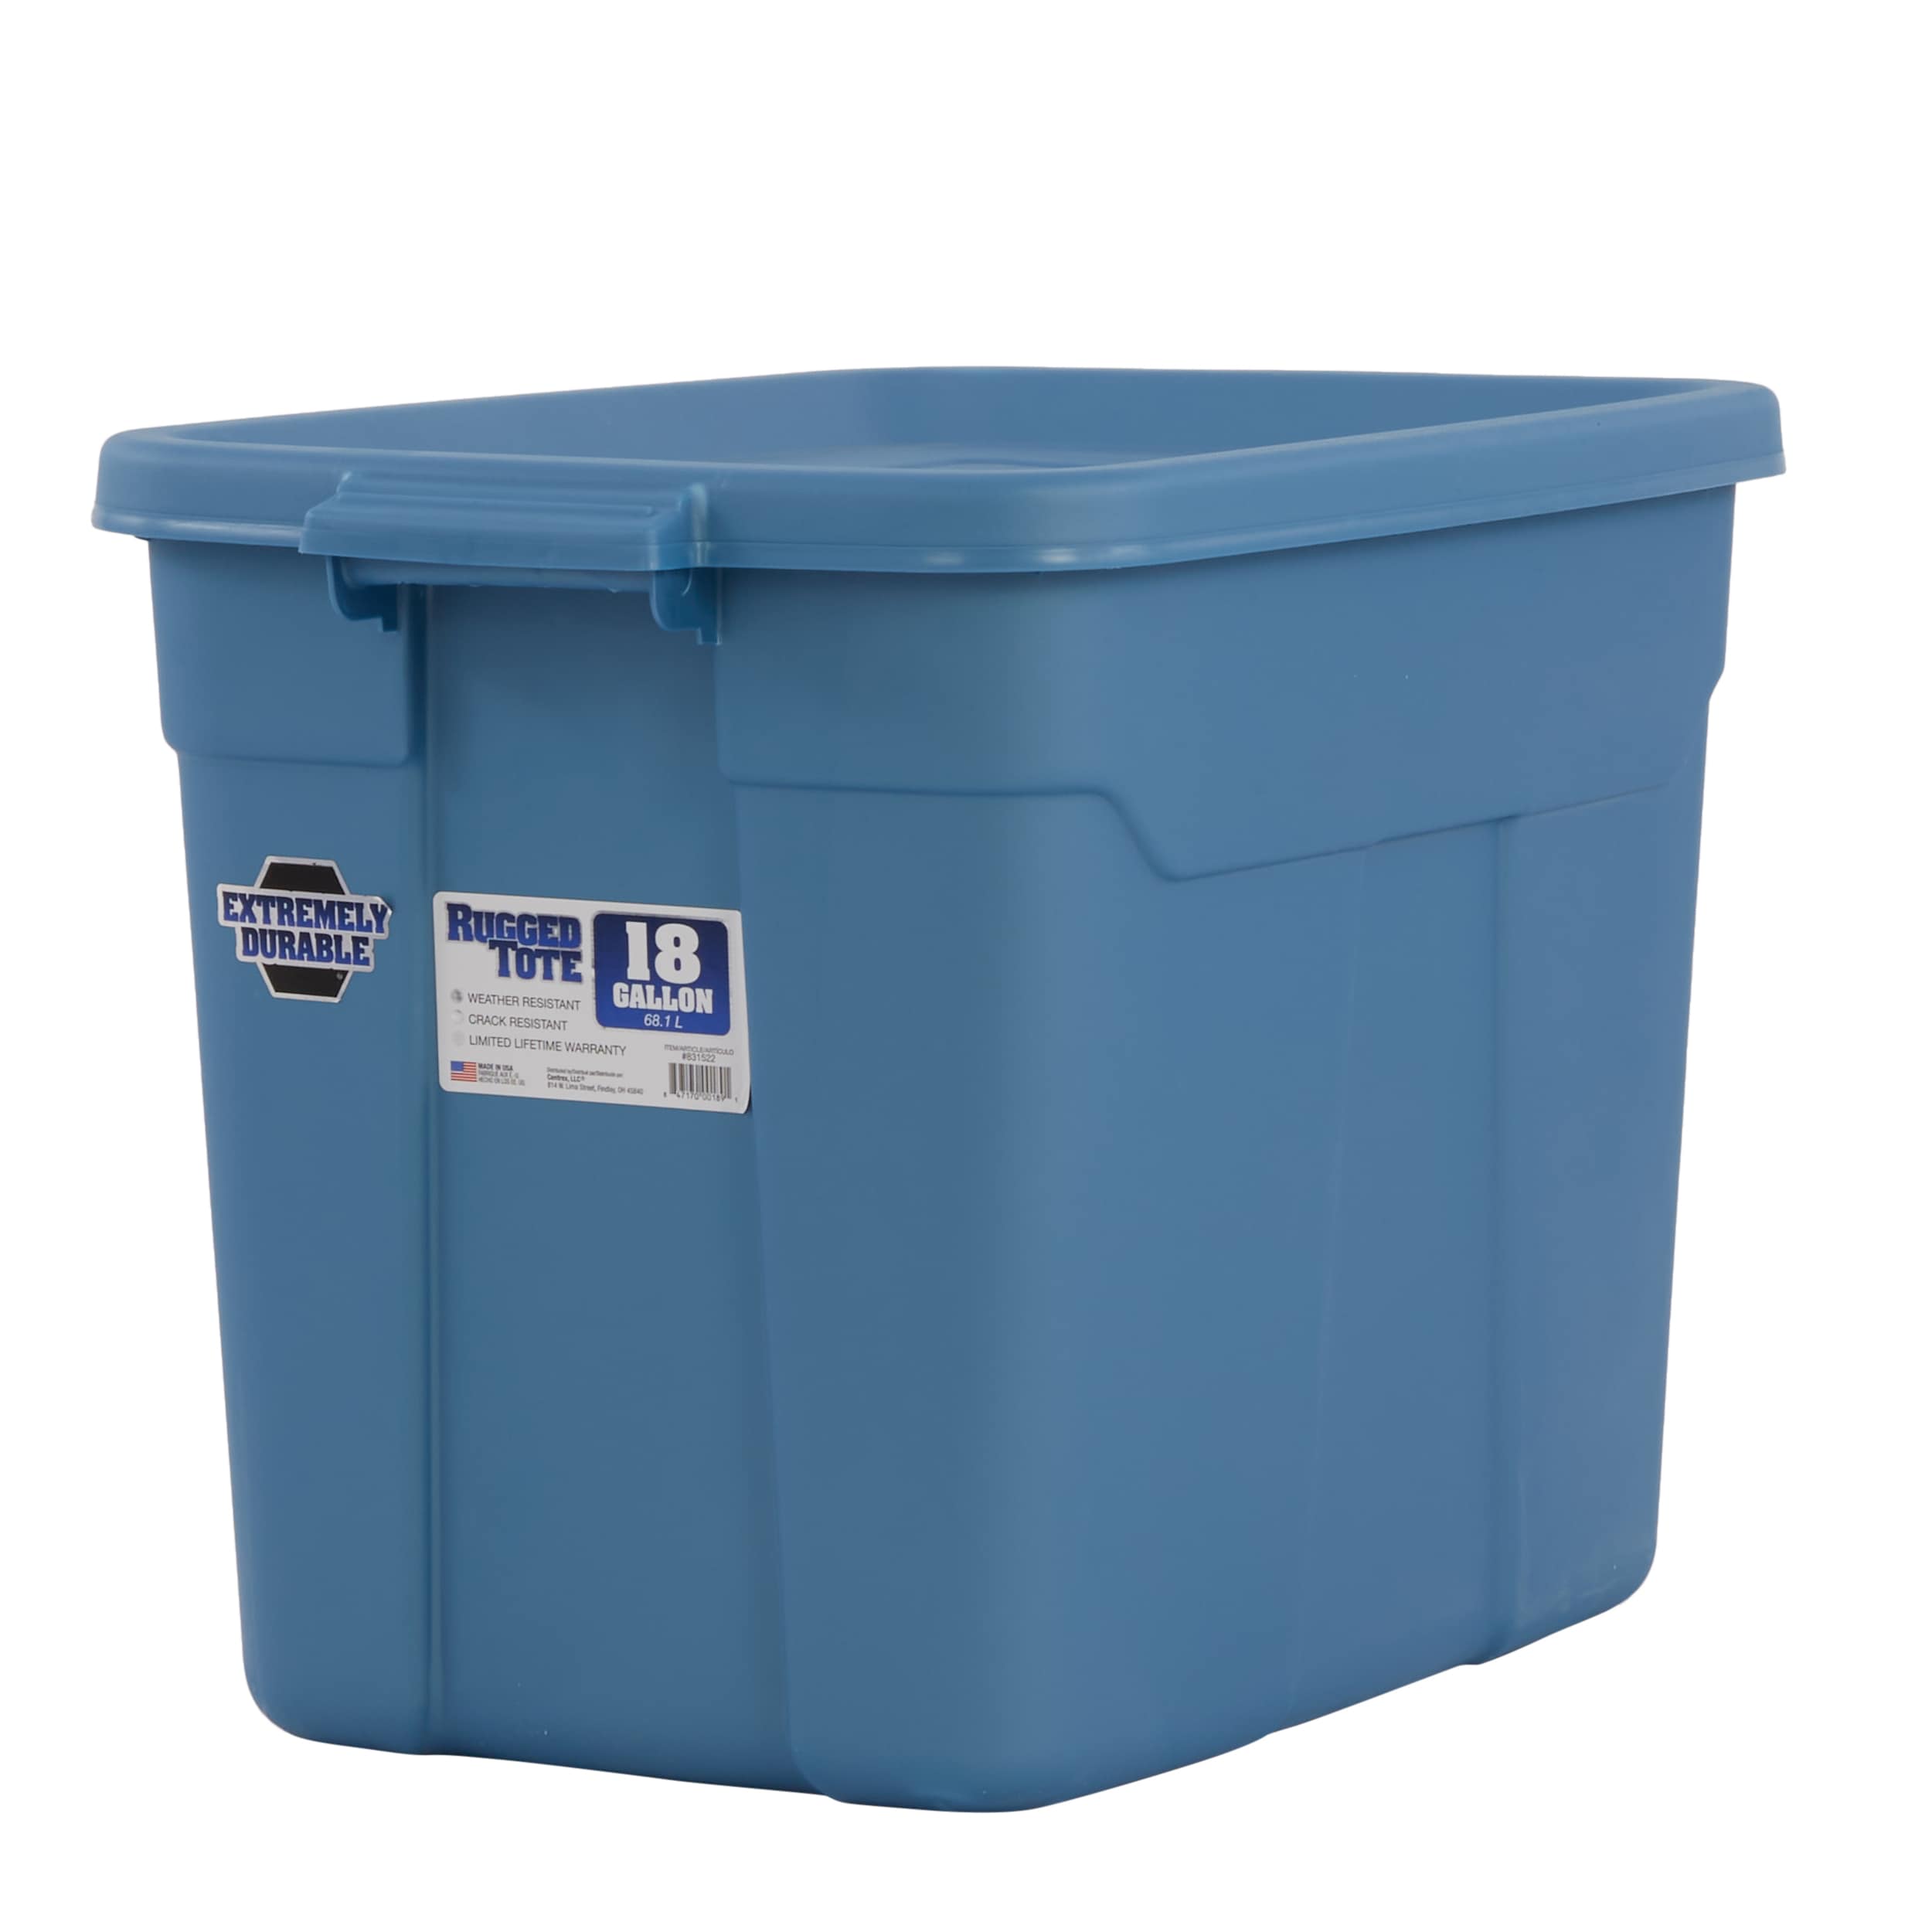 Edge Plastics 30-Gallon Gray Storage Tote at Menards®